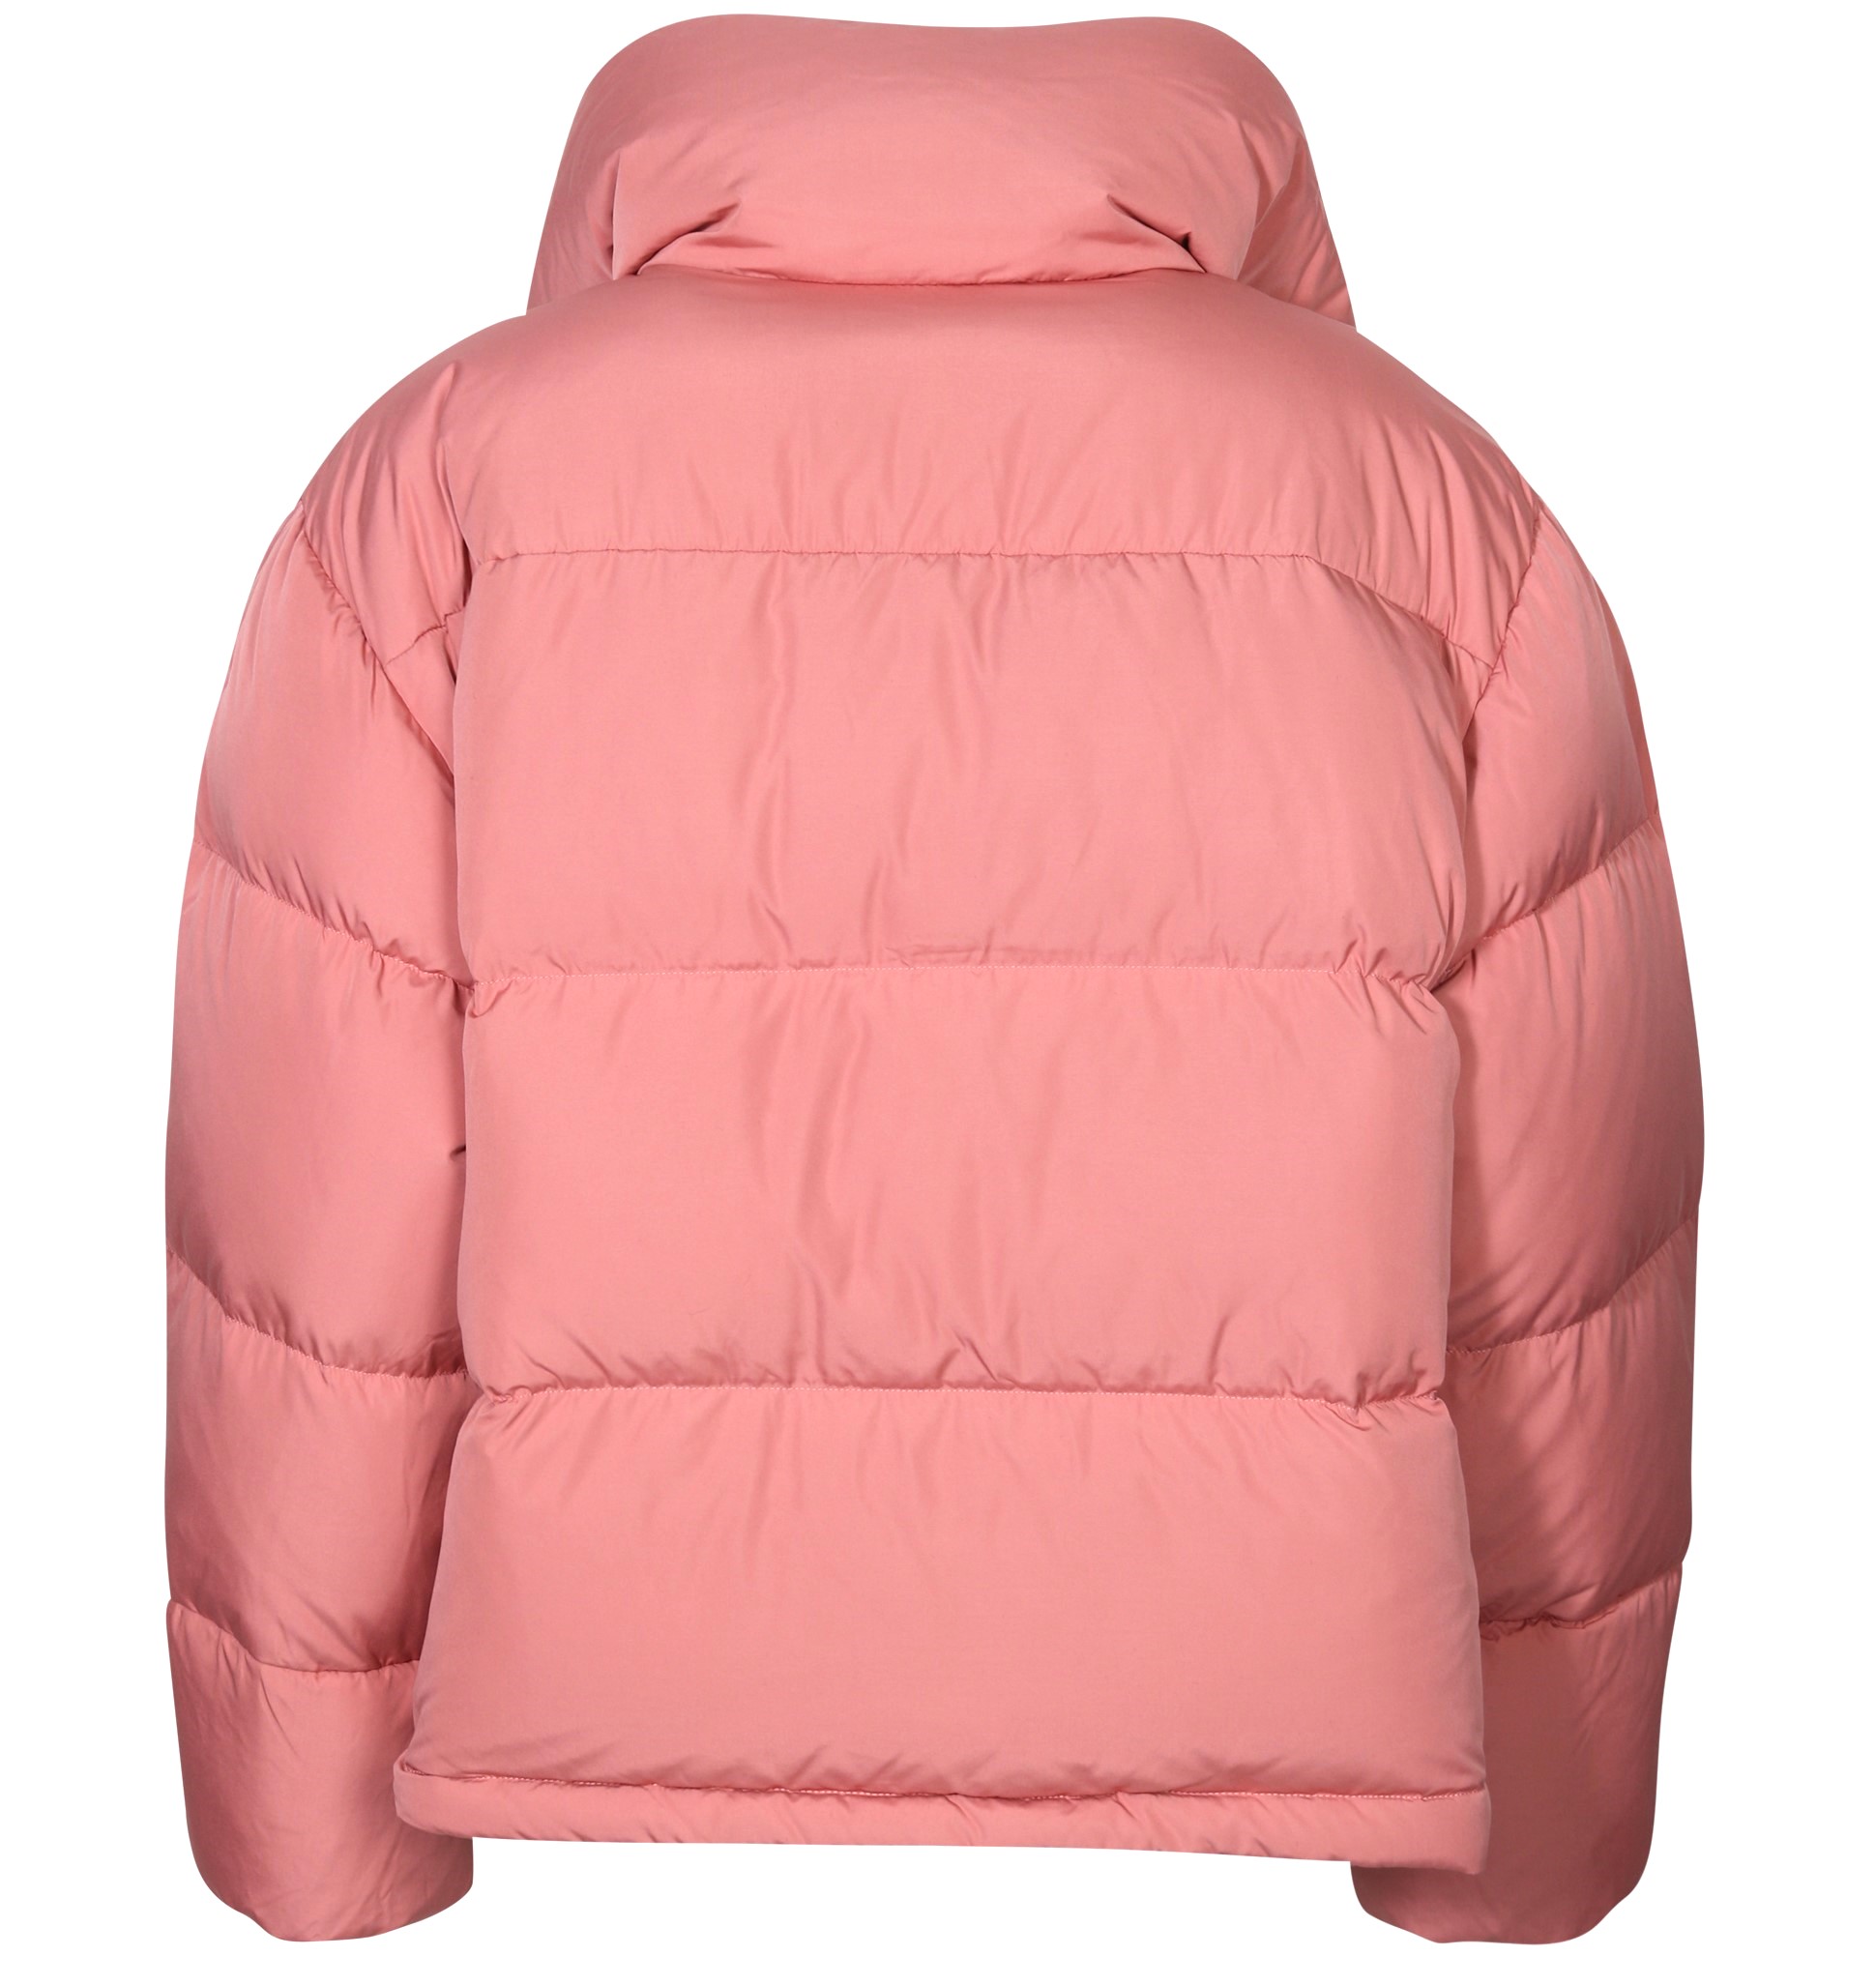 ACNE STUDIOS Puffer Jacket in Blush Pink 36